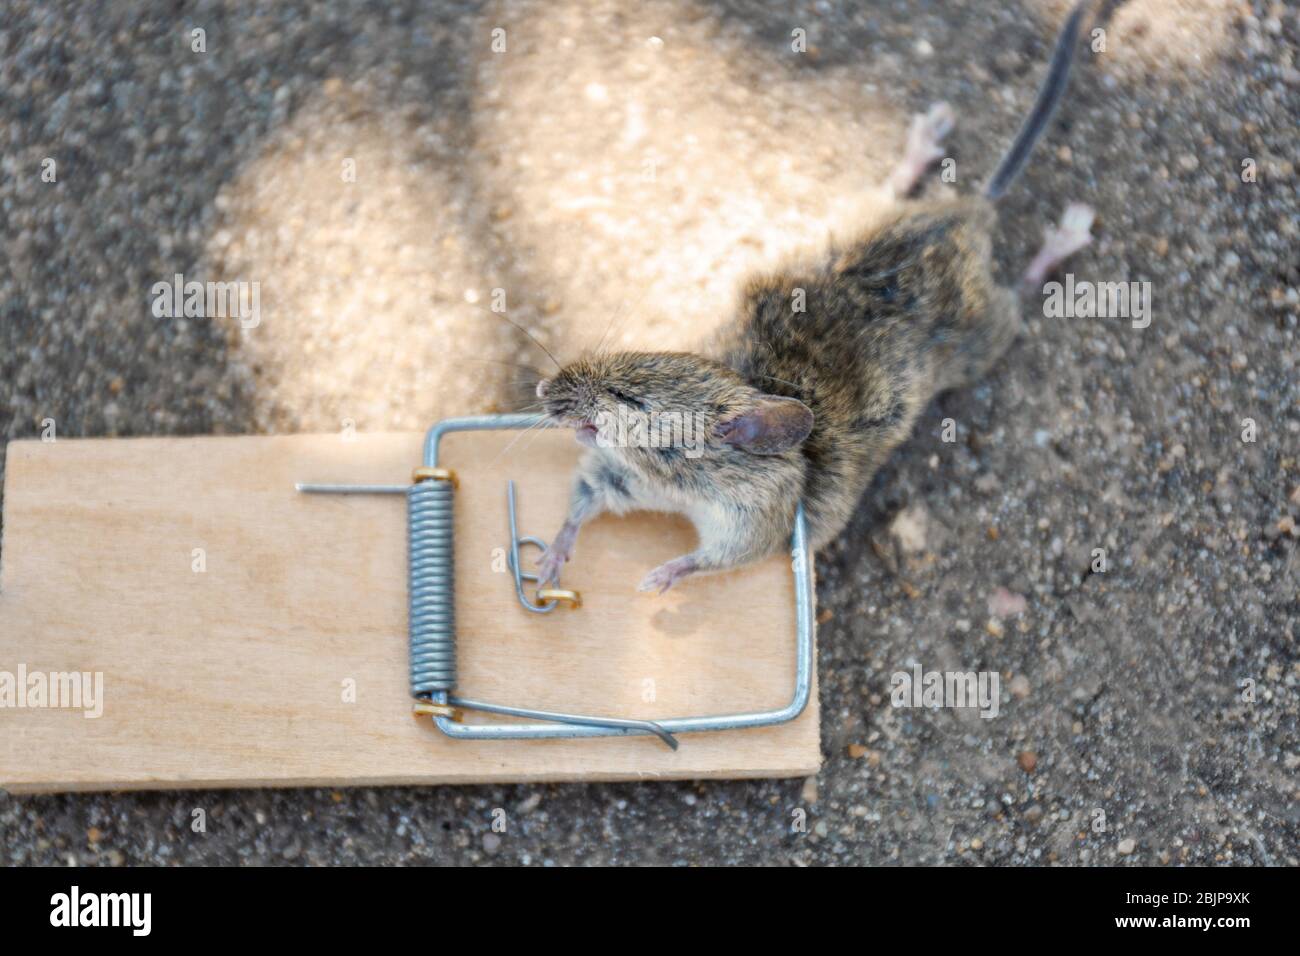 https://c8.alamy.com/comp/2BJP9XK/dead-mouse-caught-in-snap-trap-outdoors-2BJP9XK.jpg